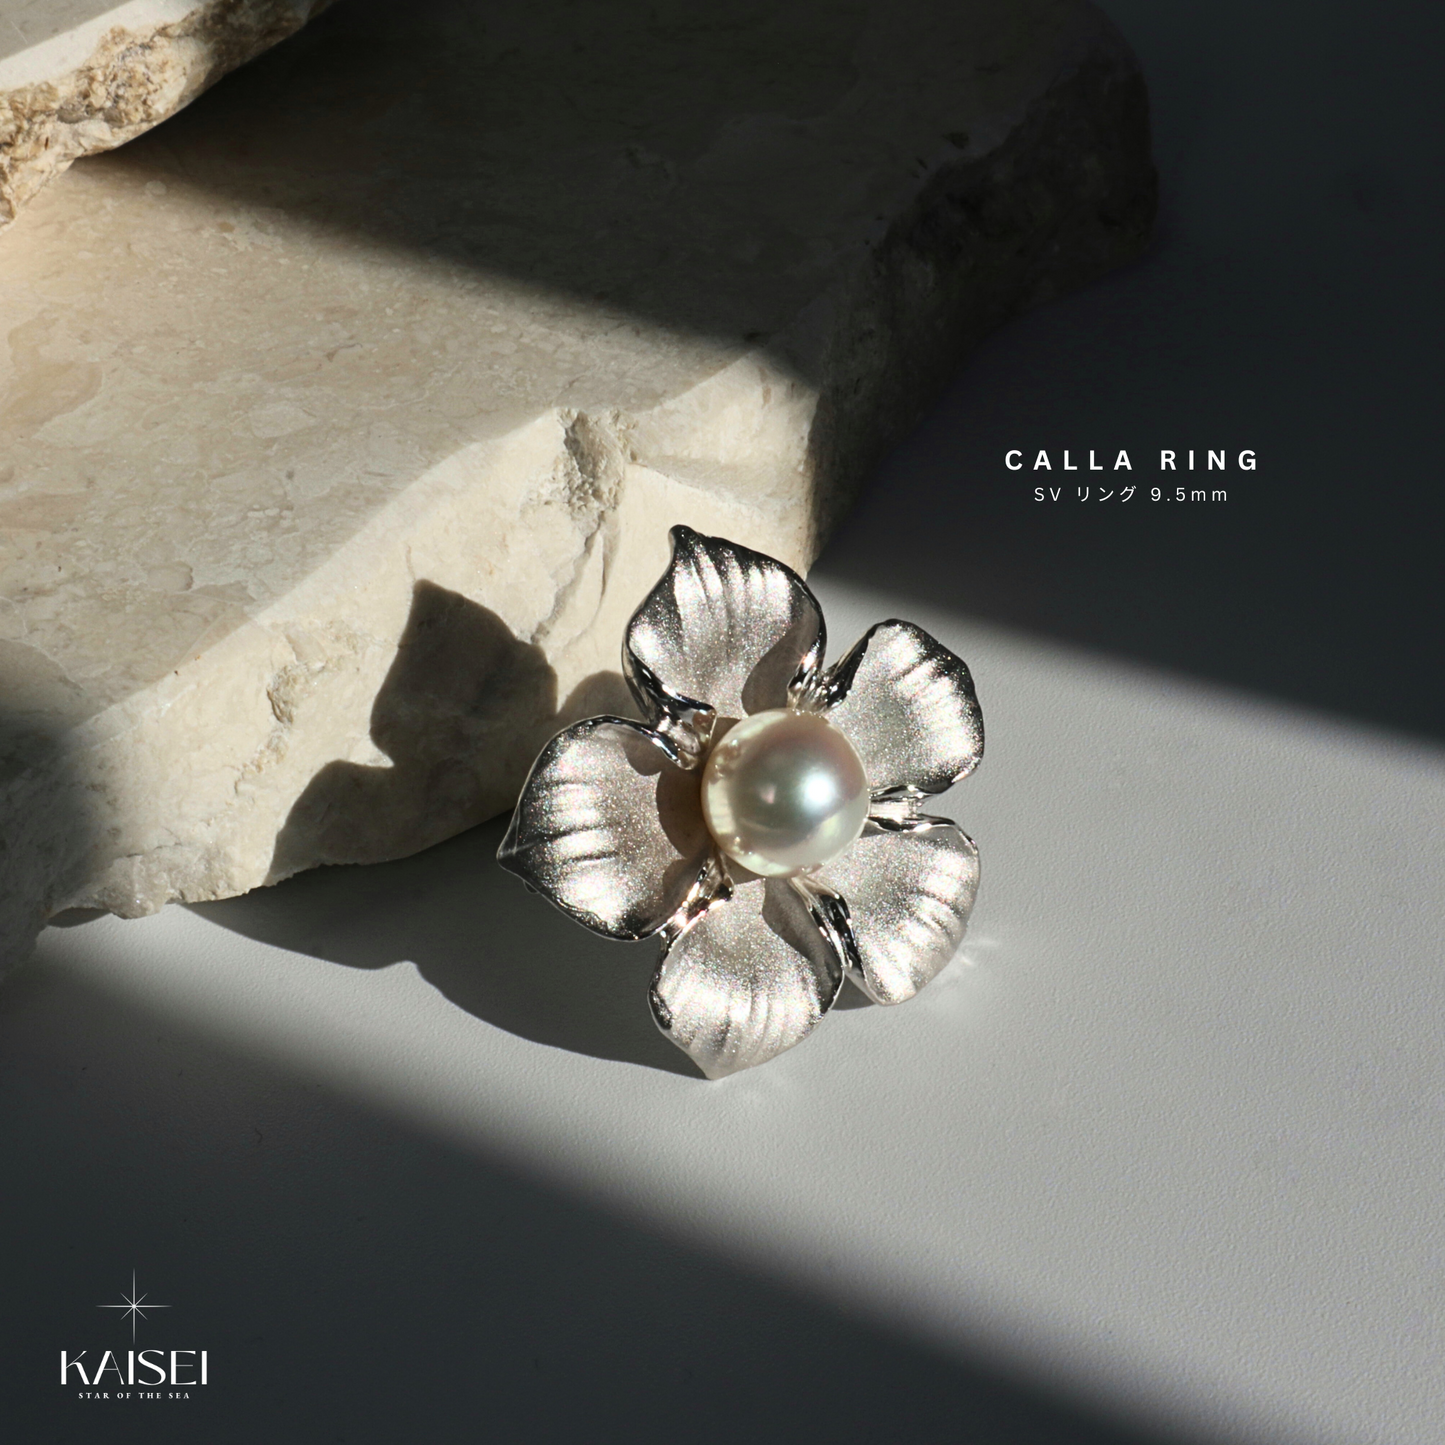 Kaisei Pearl - Calla Ring SV Japanese Akoya Pearl 9.5mm Jewelry